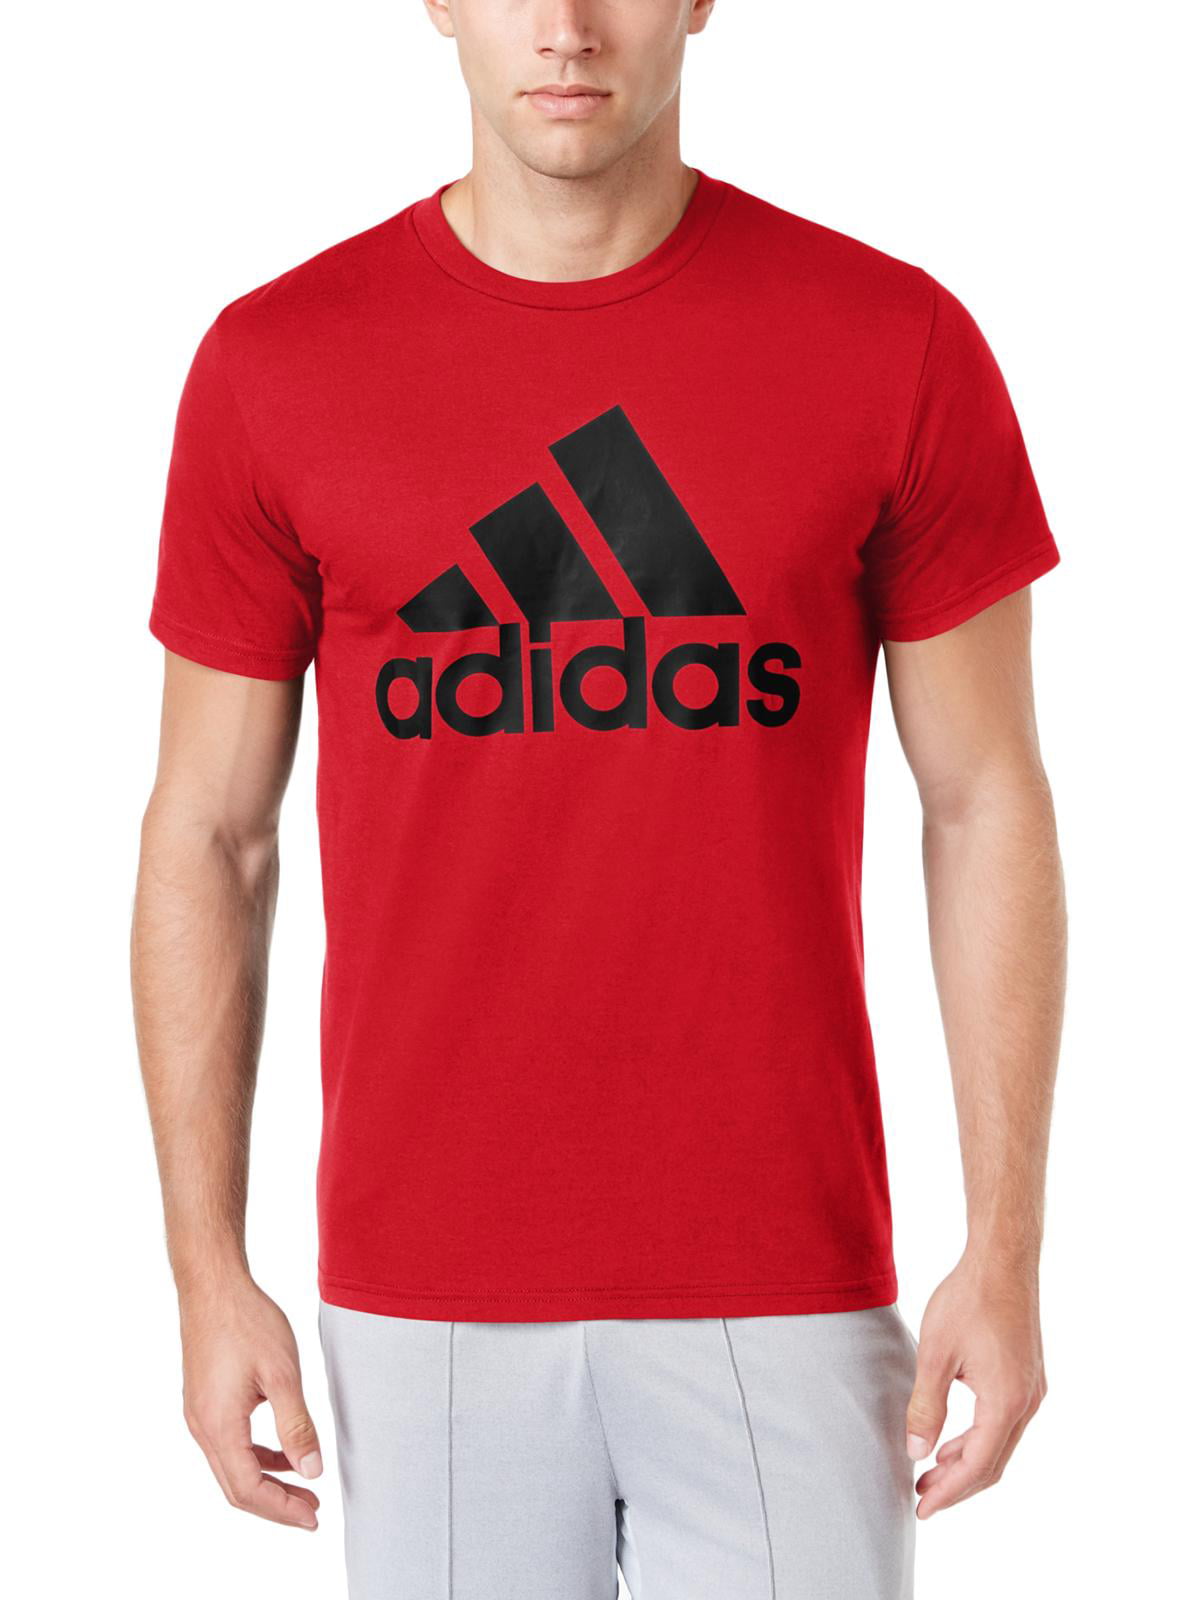 Adidas - Adidas Mens Workout Fitness T-Shirt Red S - Walmart.com ...